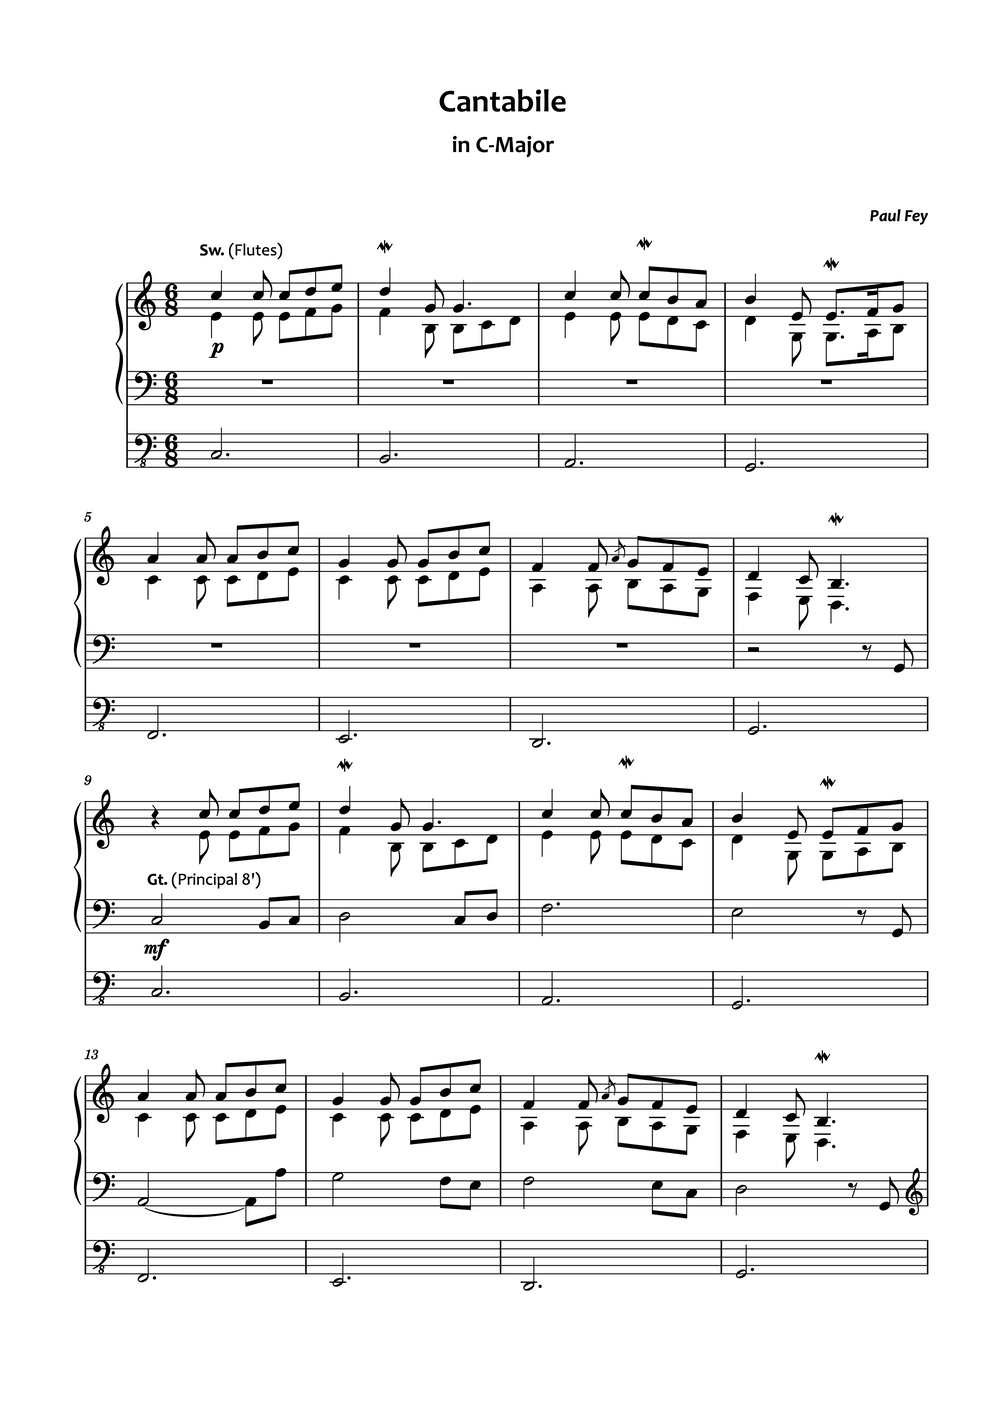 Cantabile in C-Major (Sheet Music) - Music for Organ by Paul Fey Organist 